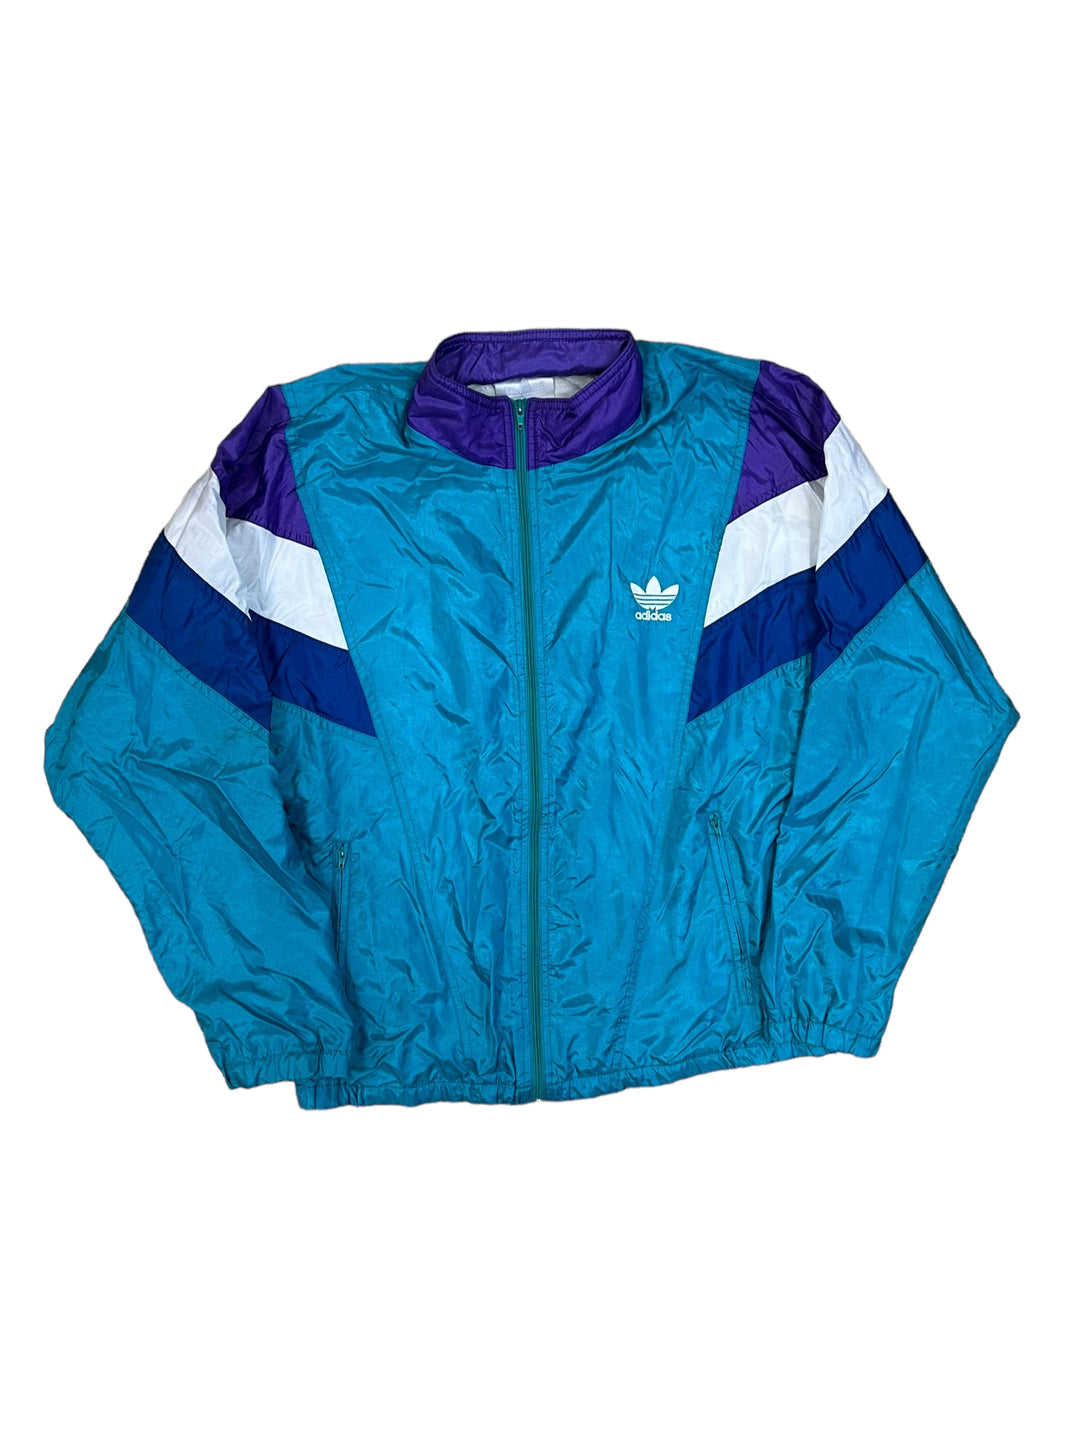 Adidas Vintage shell jacket Men’s large